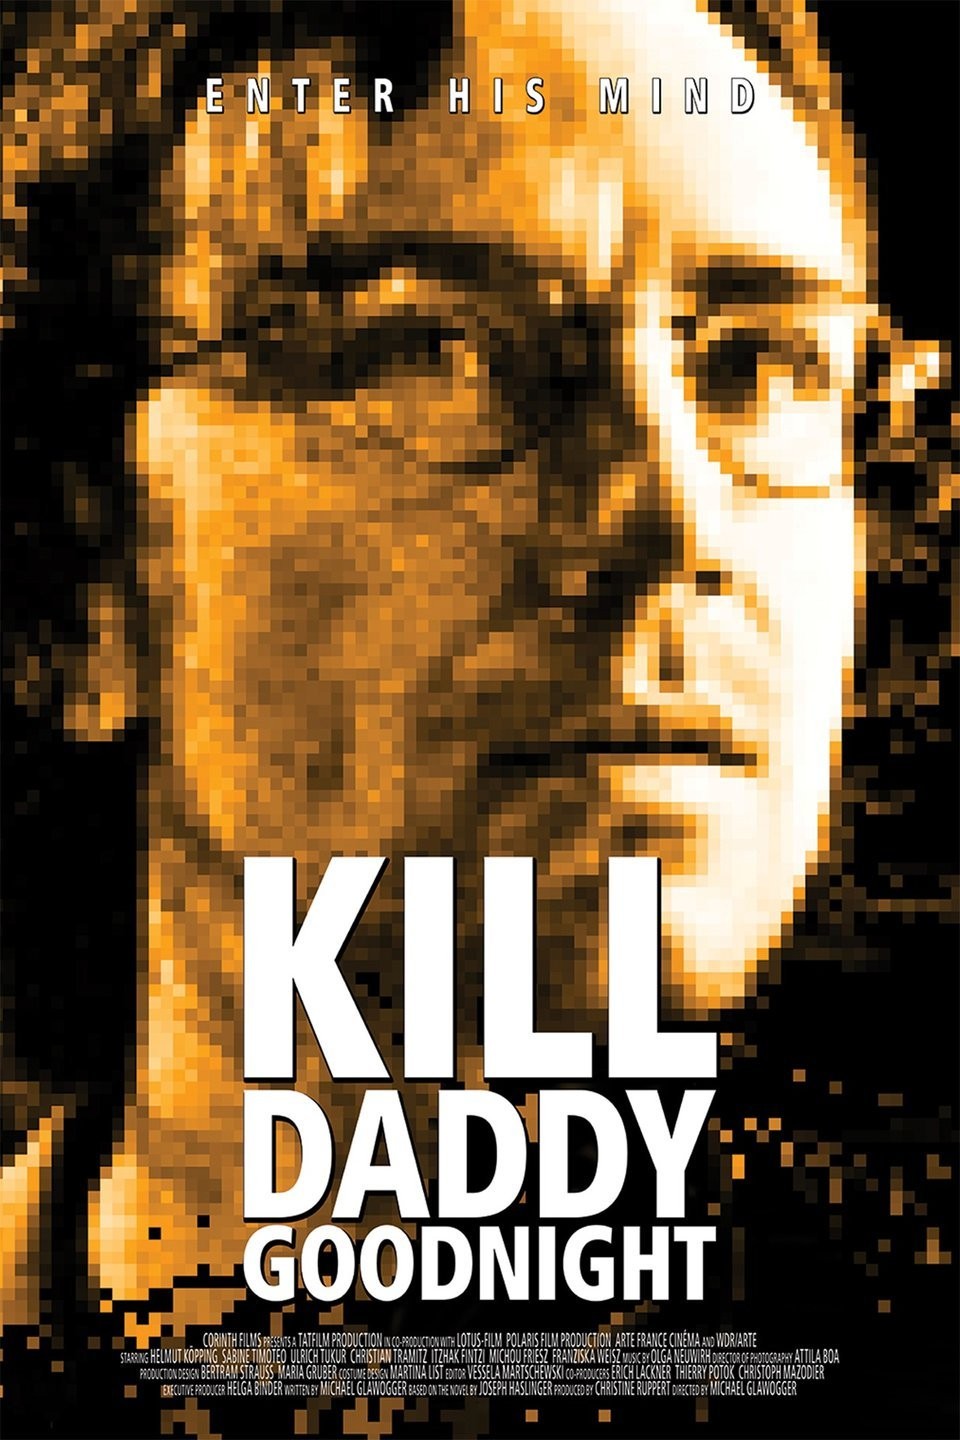 Daddy kill